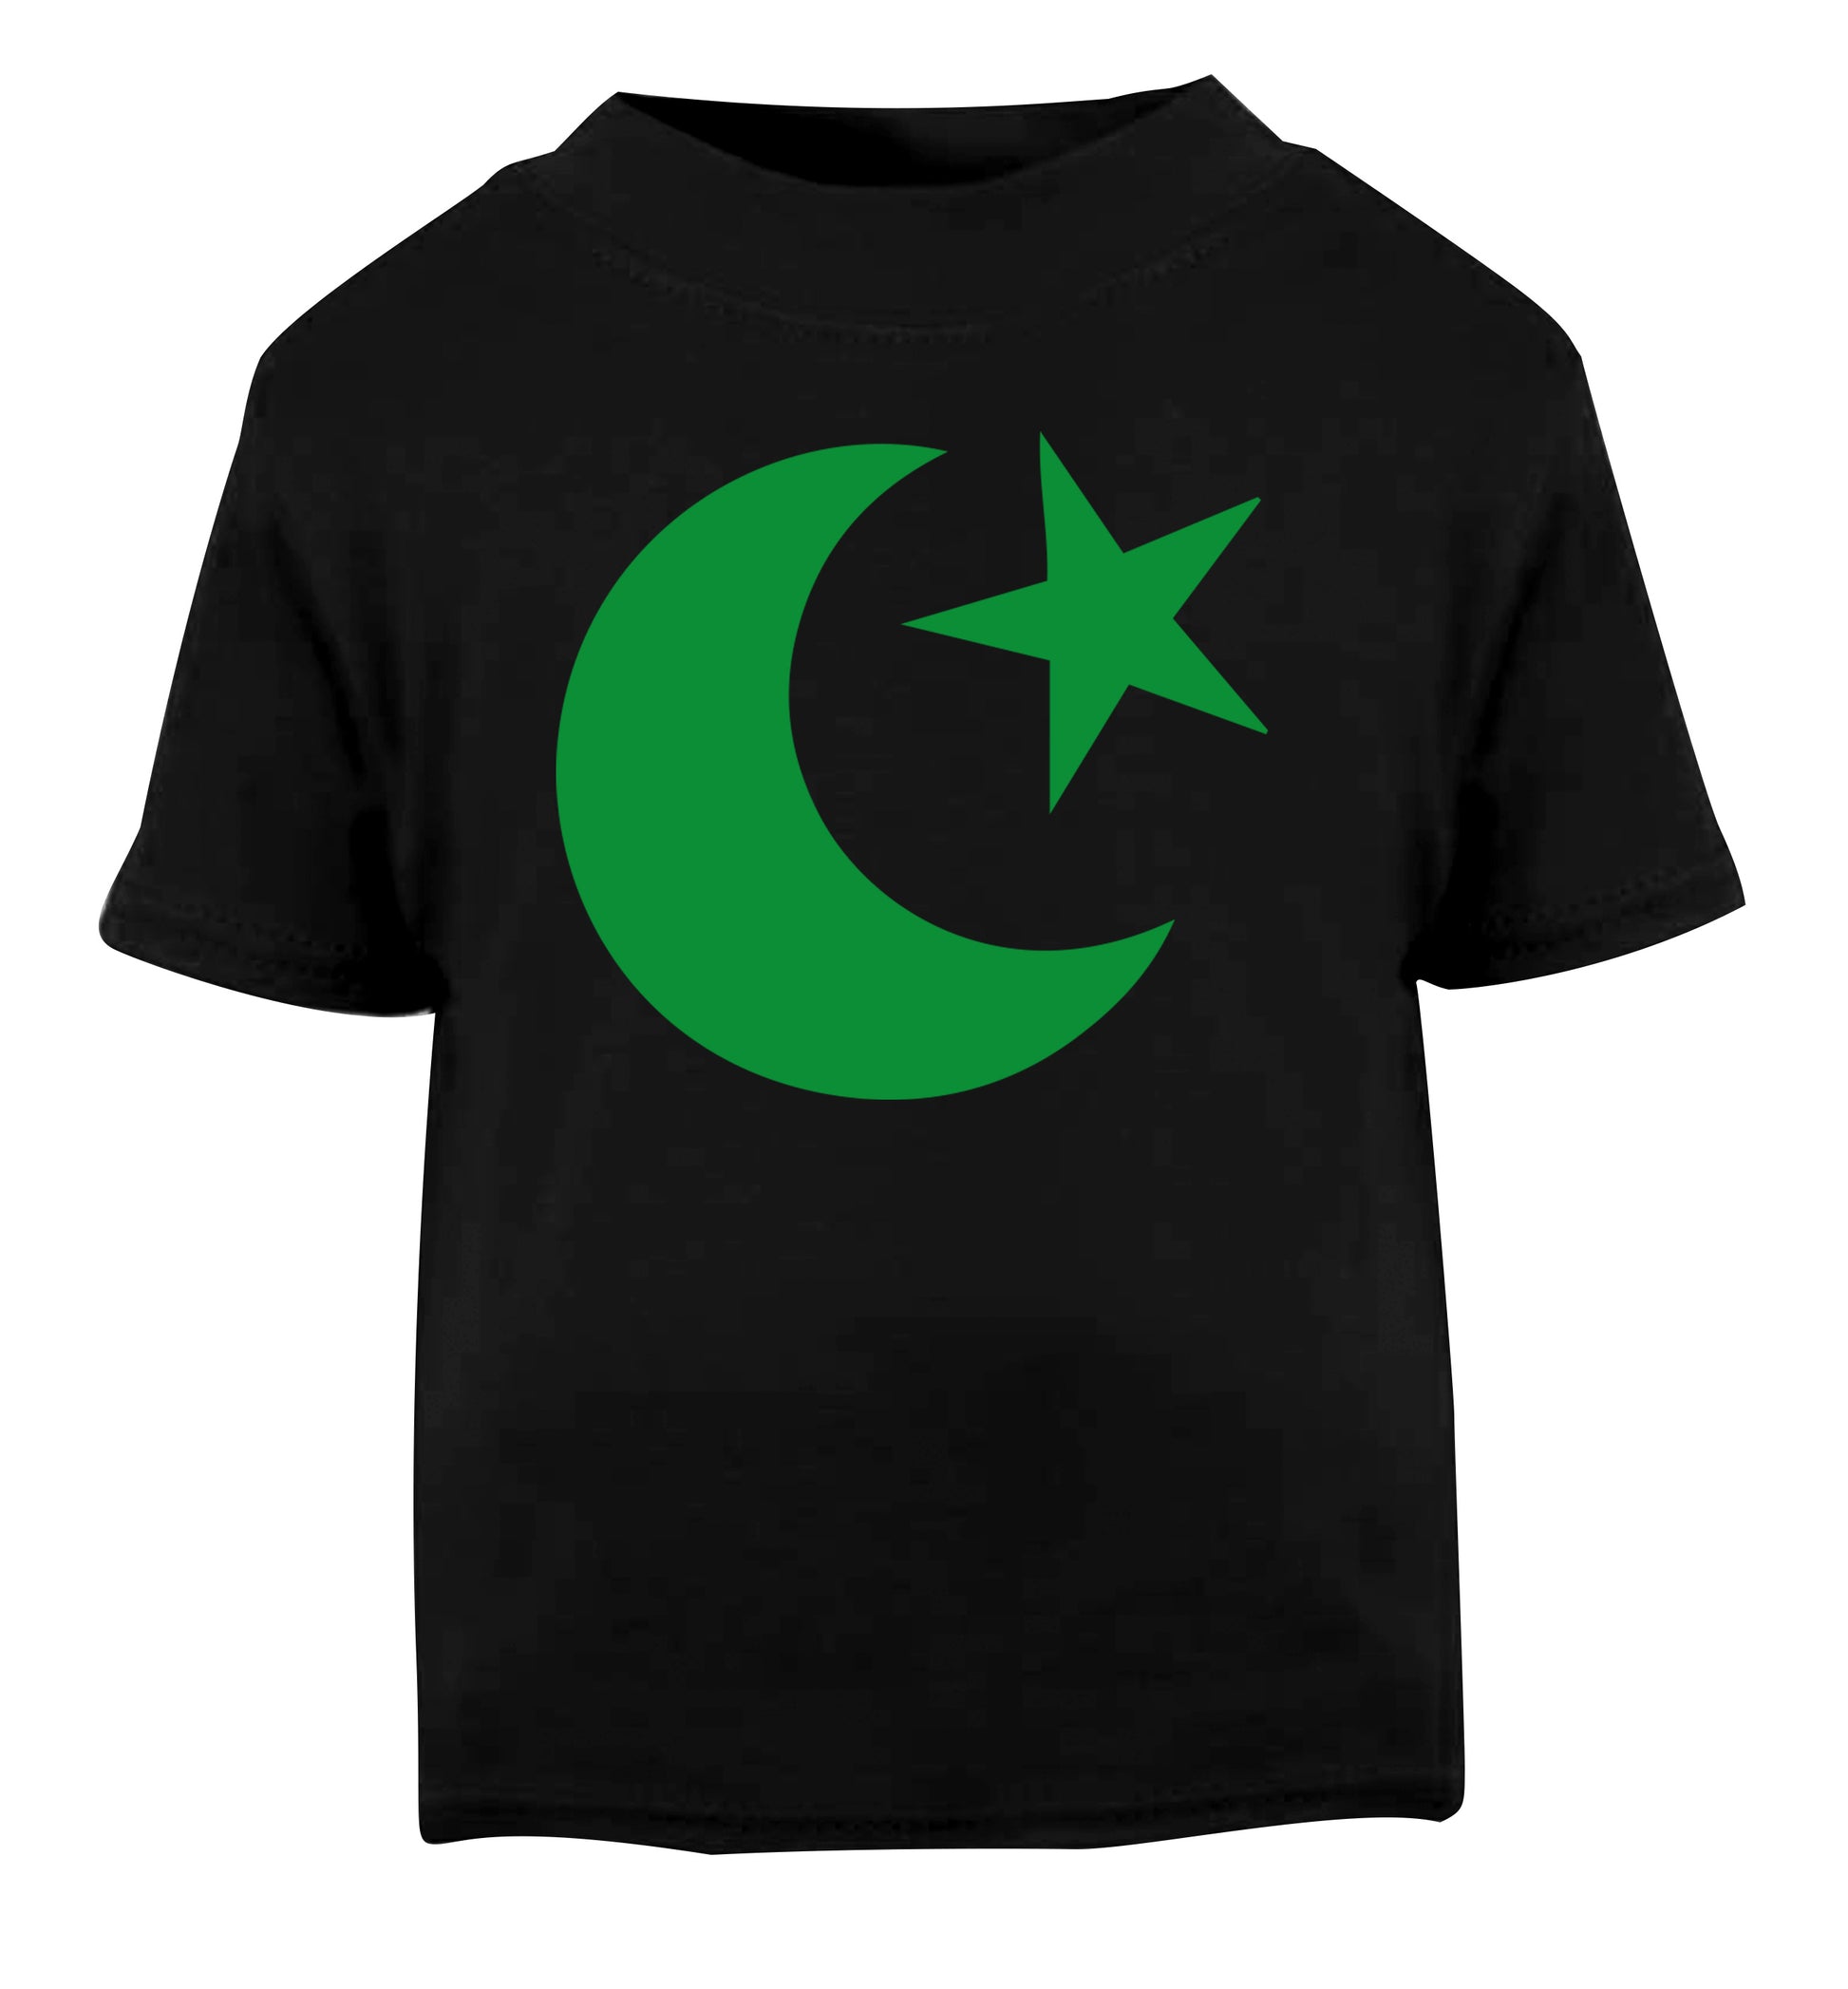 Eid symbol Black baby toddler Tshirt 2 years